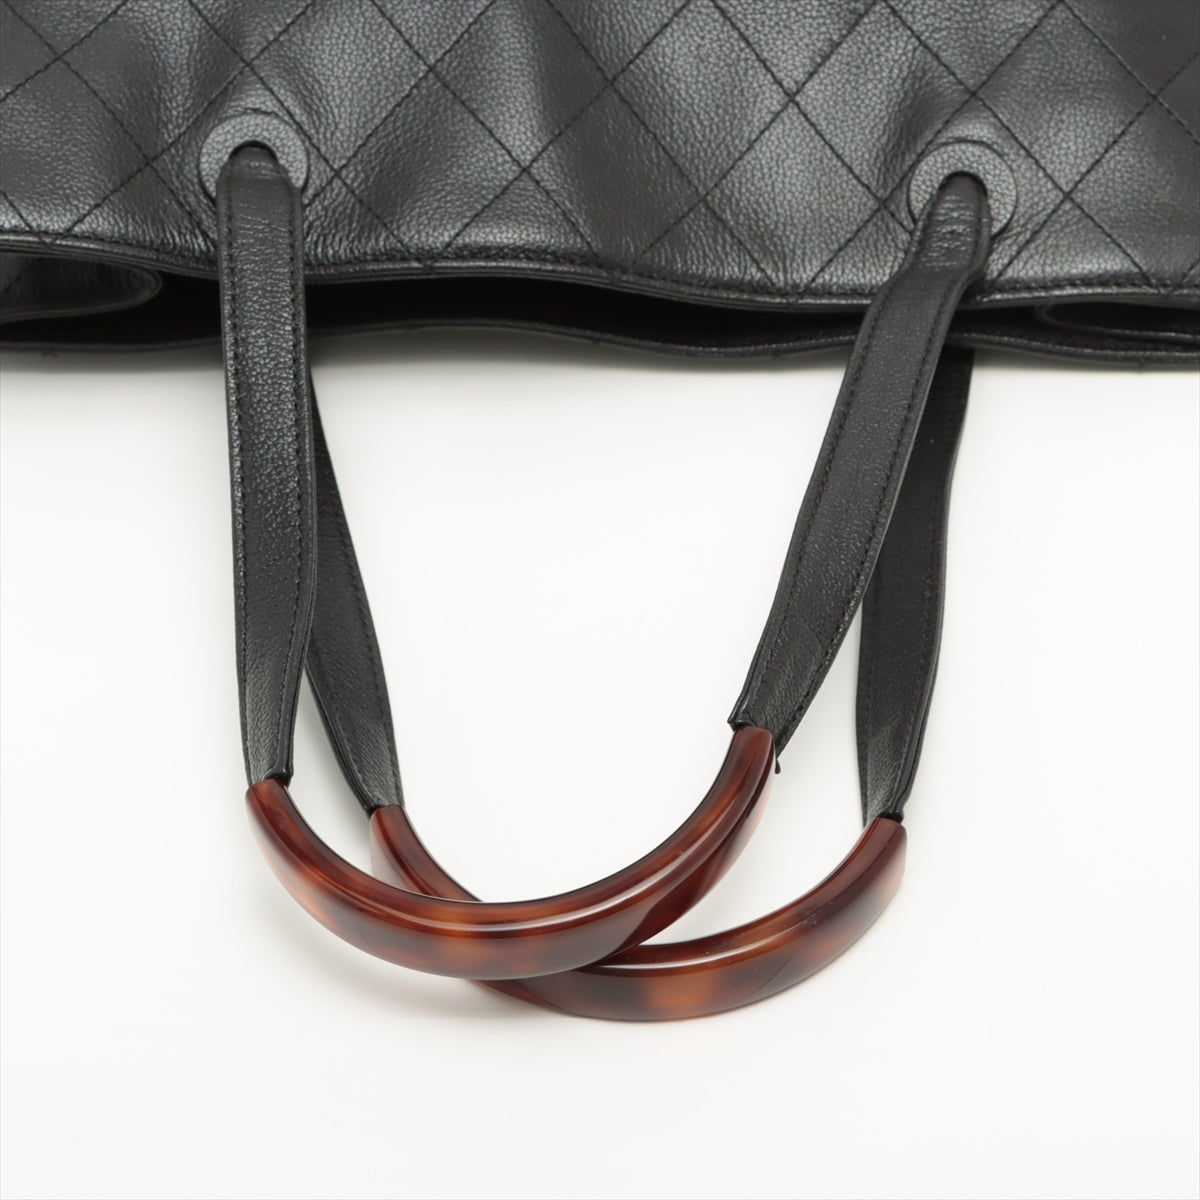 Chanel Matelasse Leather Tote bag Black 5XXXXXX